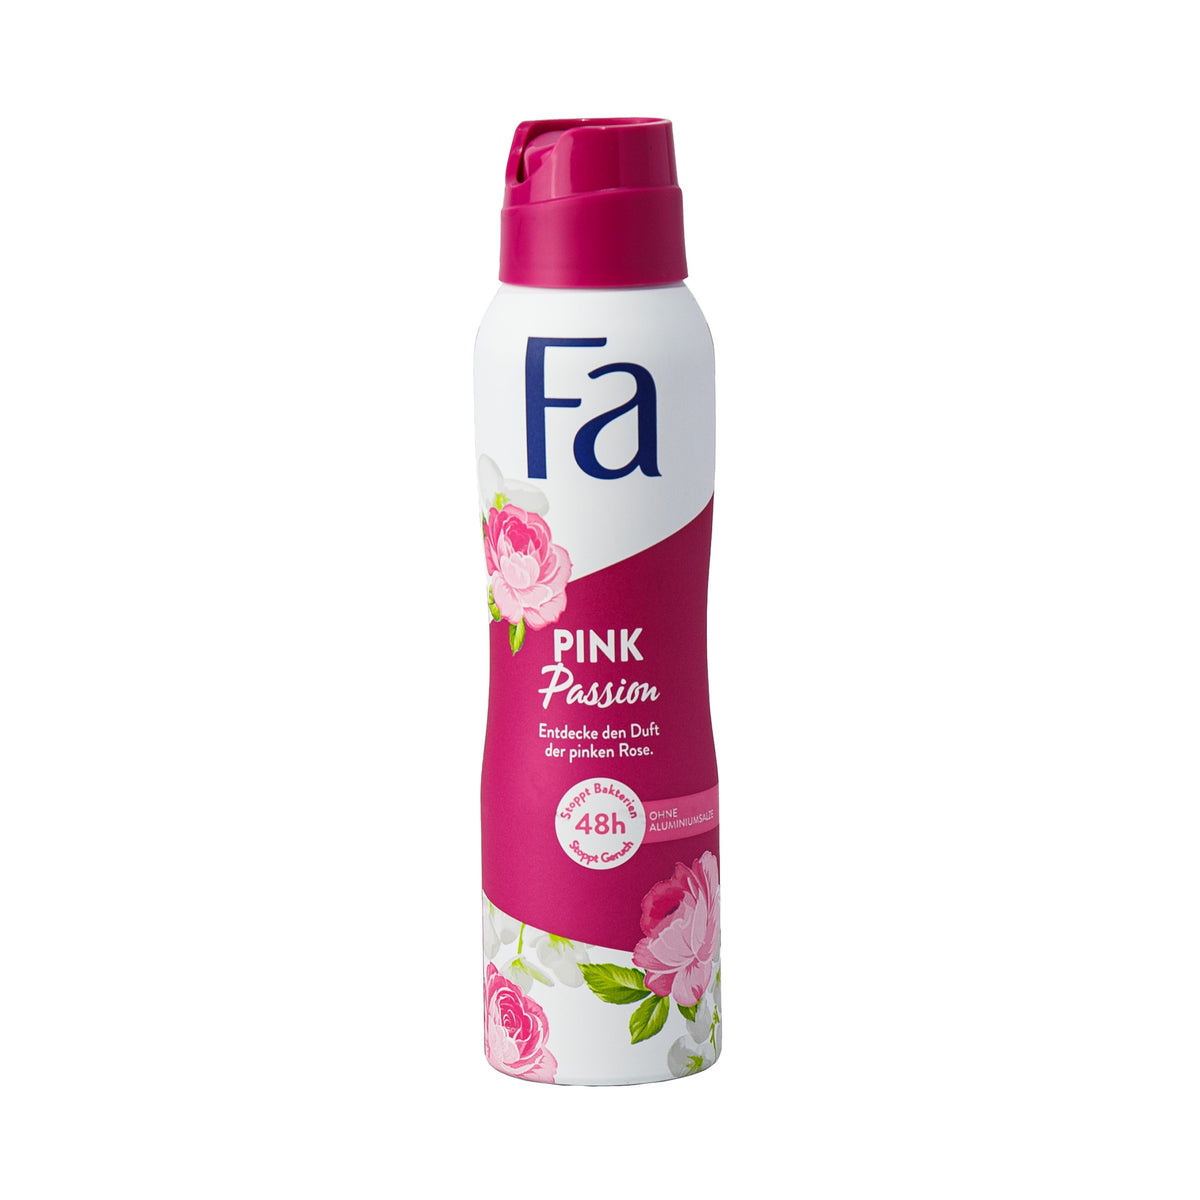 Primary image of Pink Passion Deodorant Spray